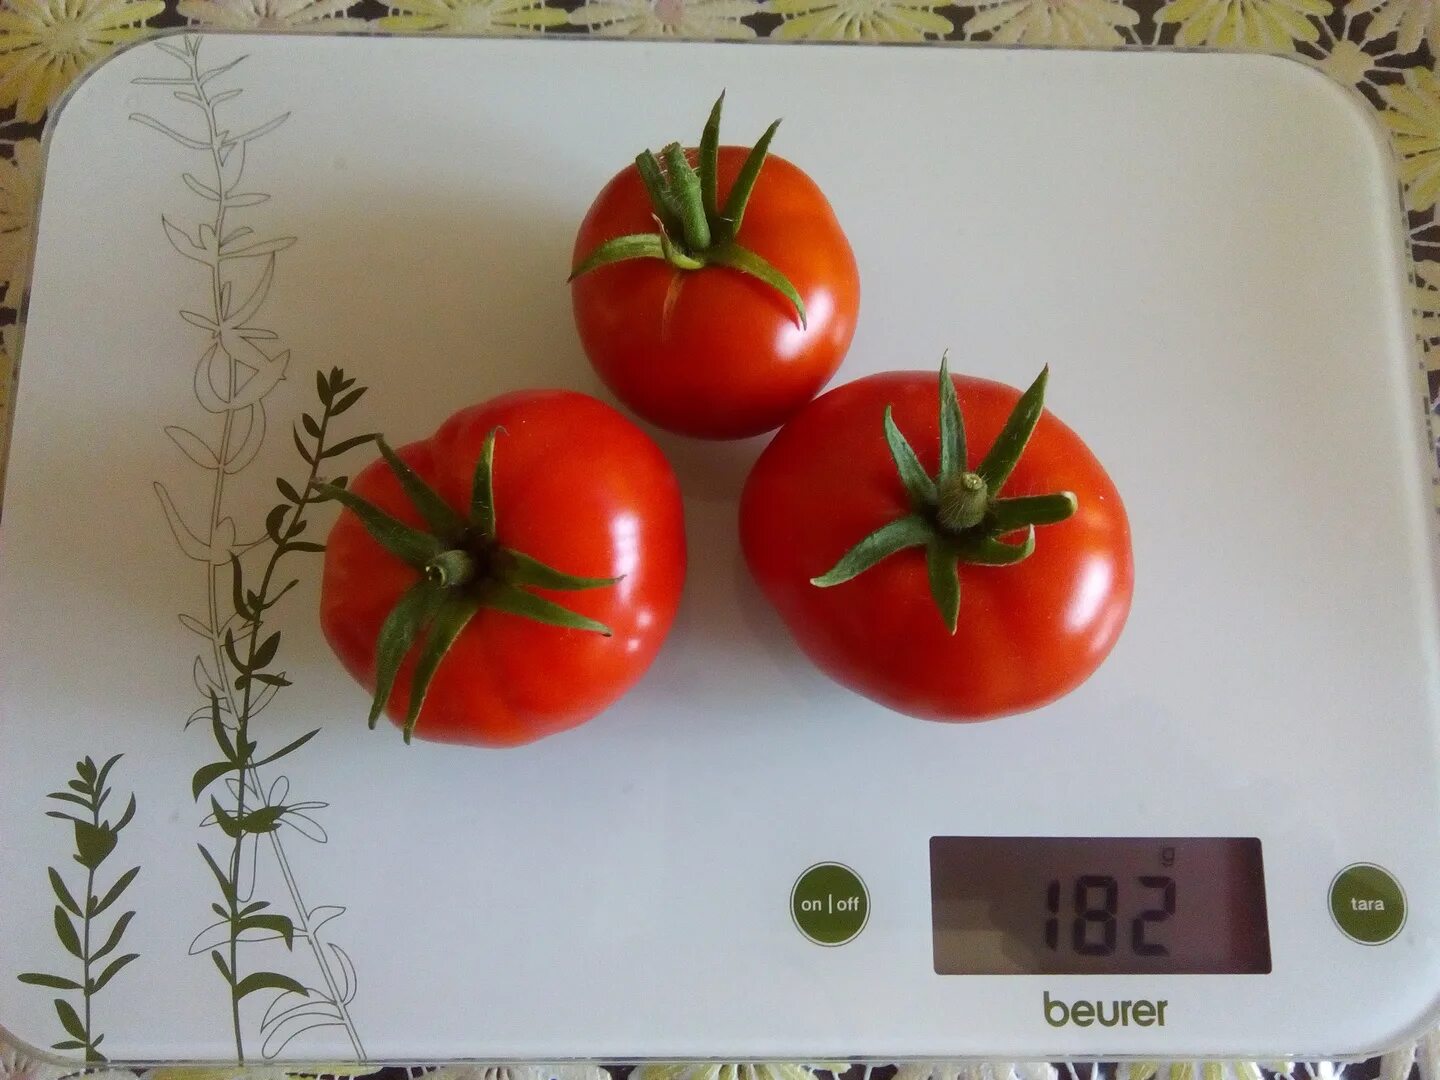 Кг томаты 1 кг. Томат черри вес 1 шт. Помидор черри вес 1 шт. Вес 1 помидора черри. Вес одного помидора.